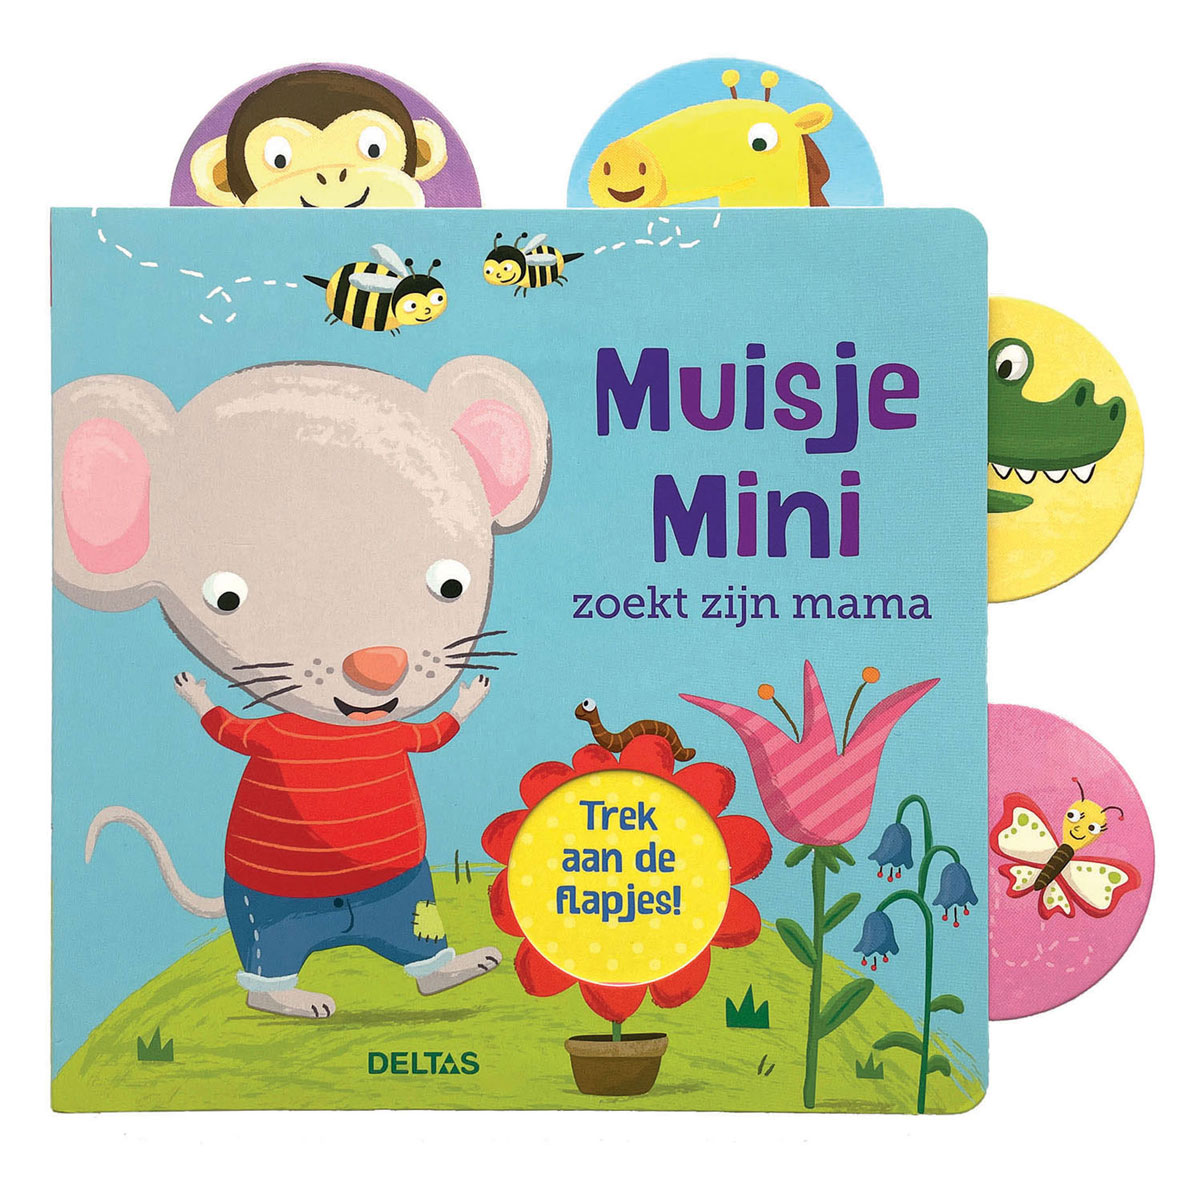 Mini-Maus sucht das Brettbuch „Seine Mama“.